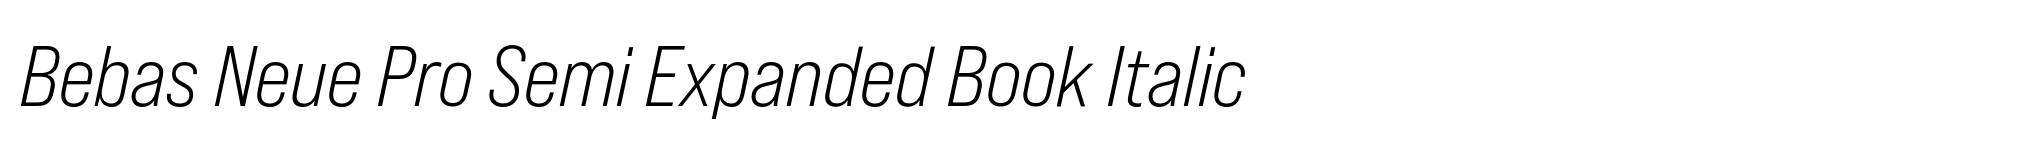 Bebas Neue Pro Semi Expanded Book Italic image